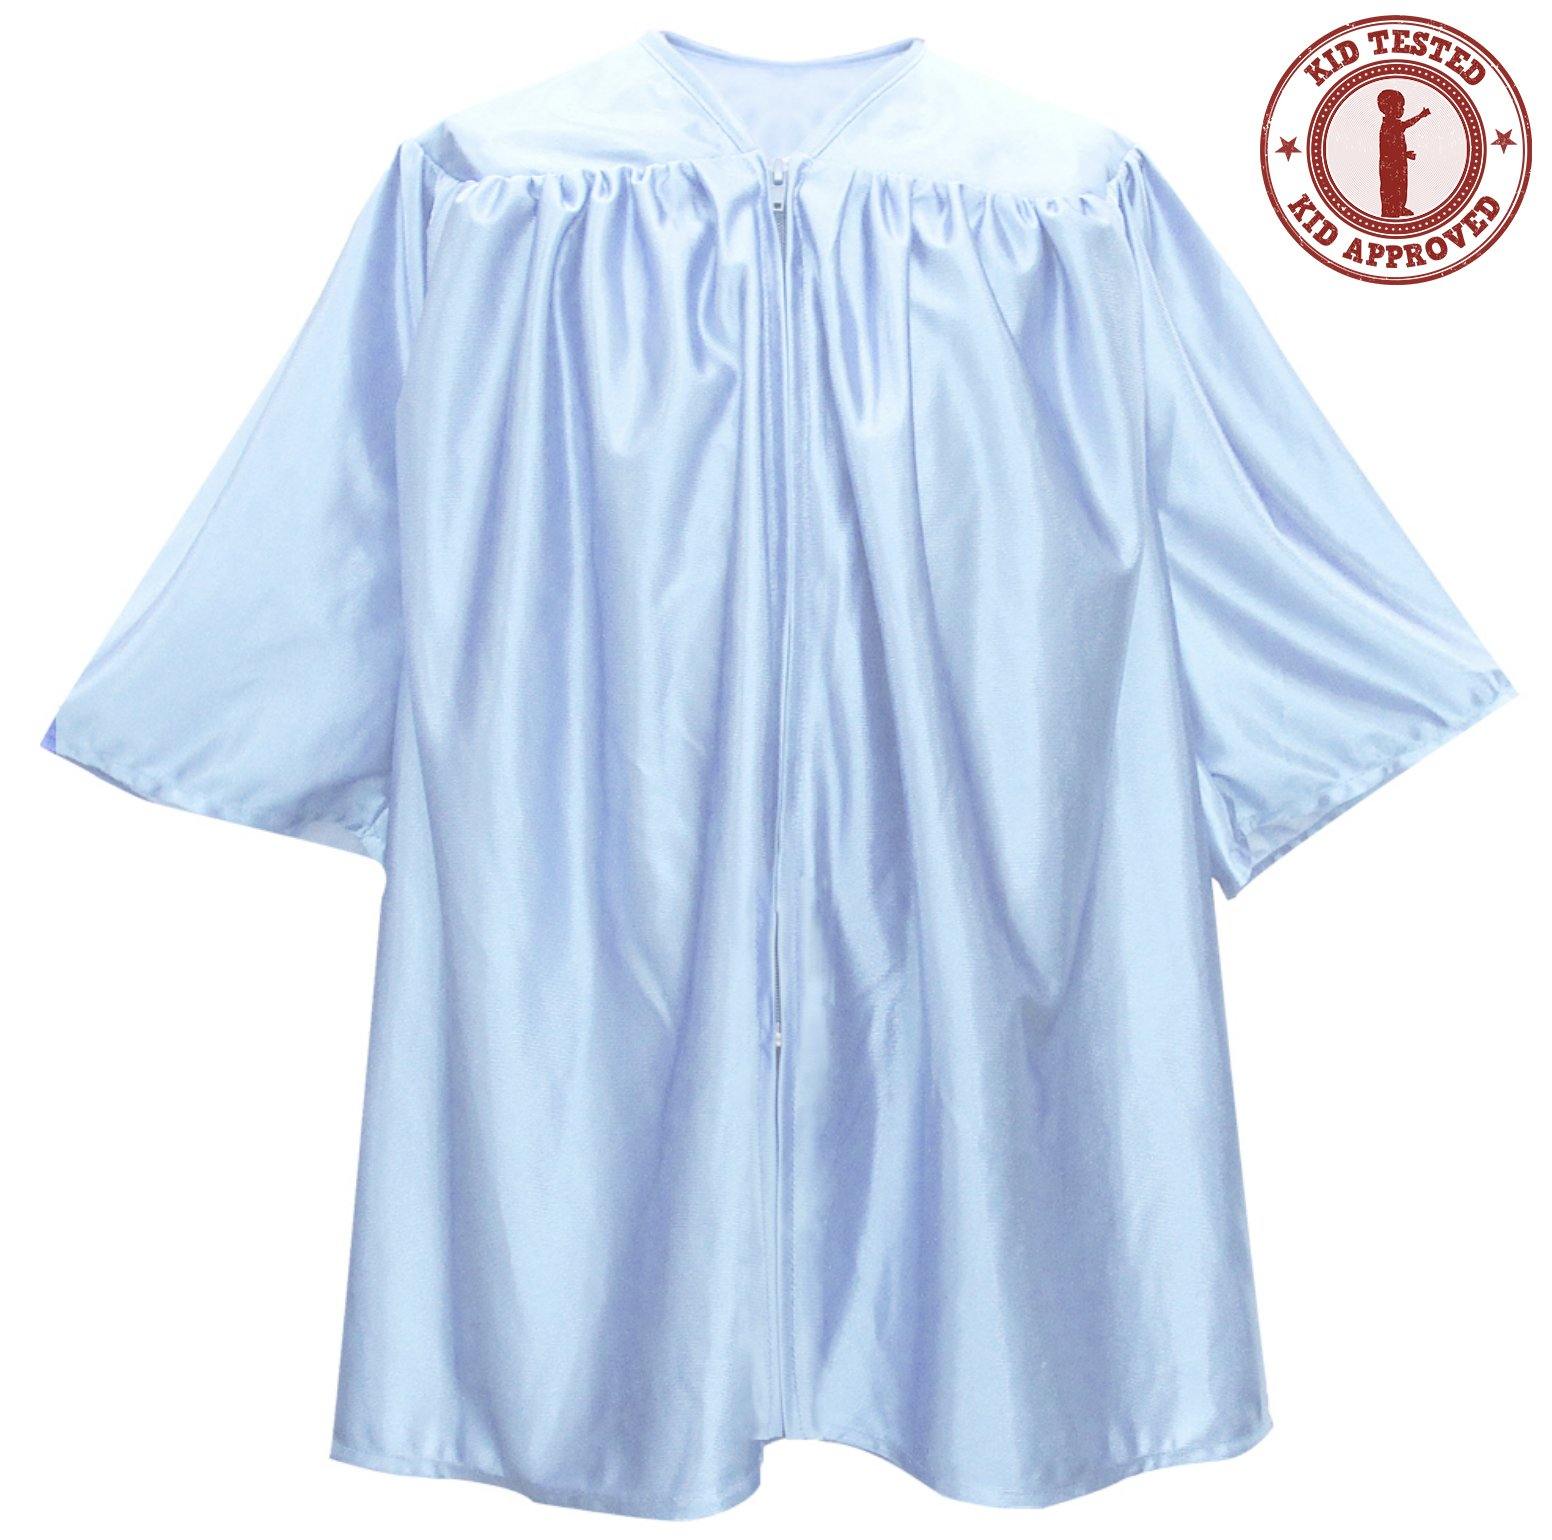 Child Light Blue Graduation Gown - Preschool & Kindergarten Gowns - Clerkmans